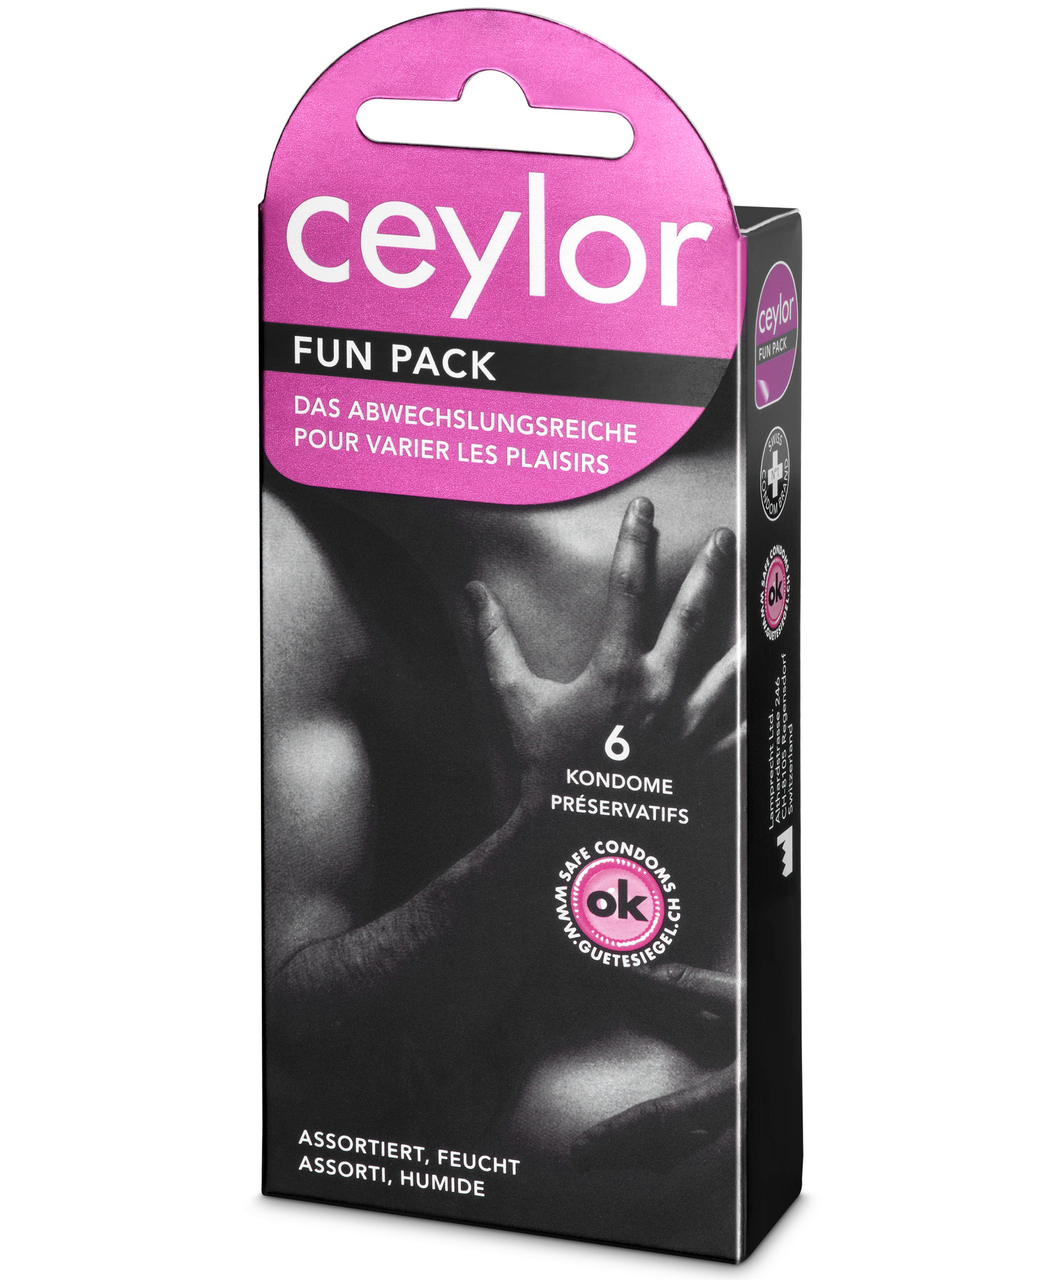 Ceylor Fun Pack презервативы (6 шт.)